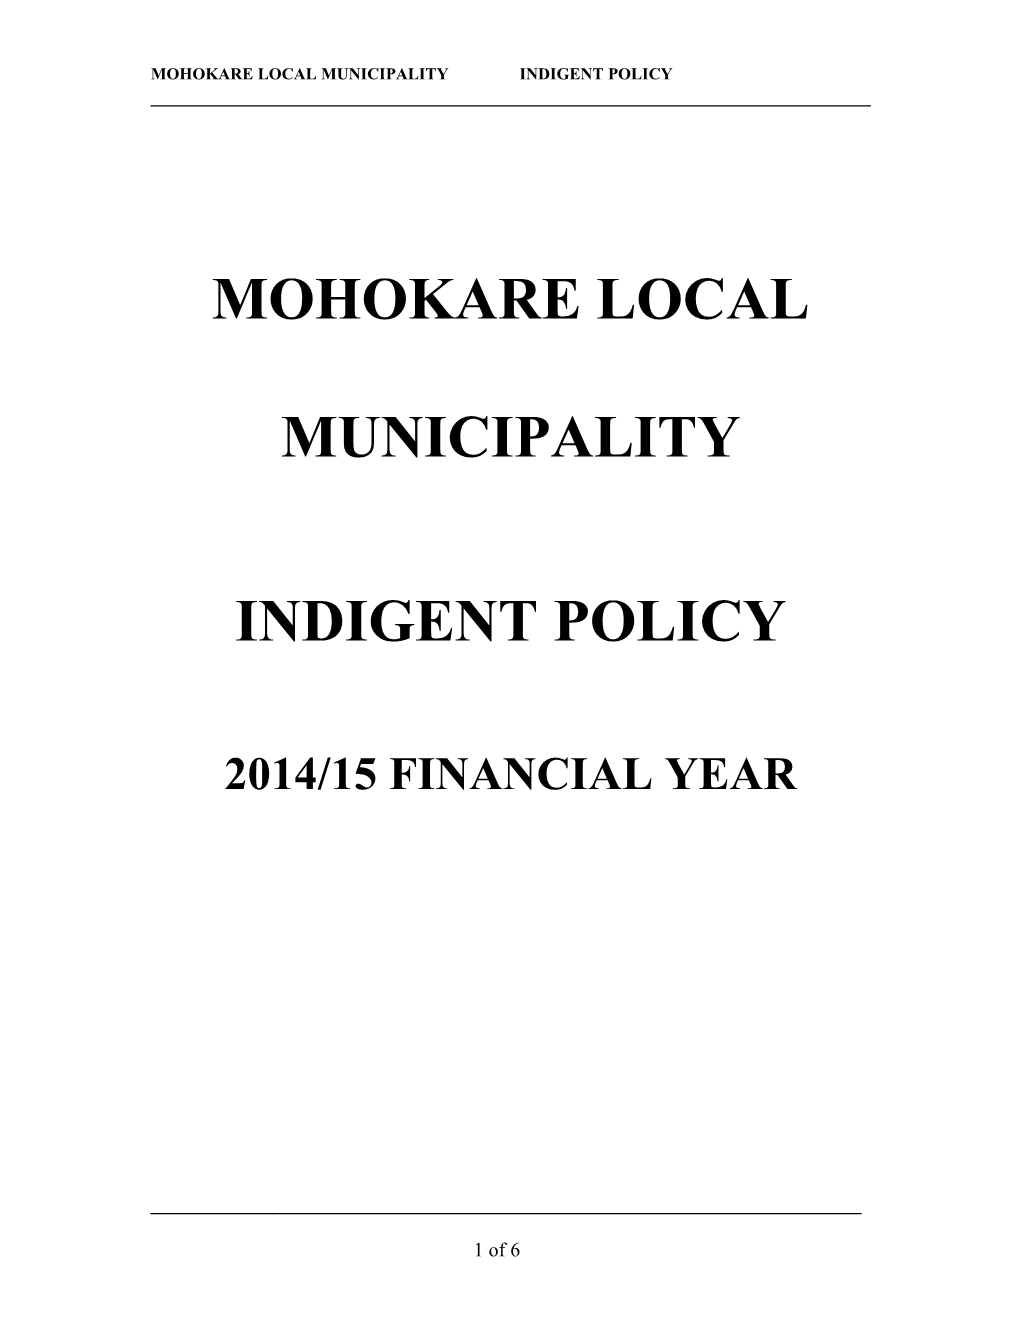 Mohokare Local Municipality Indigent Policy